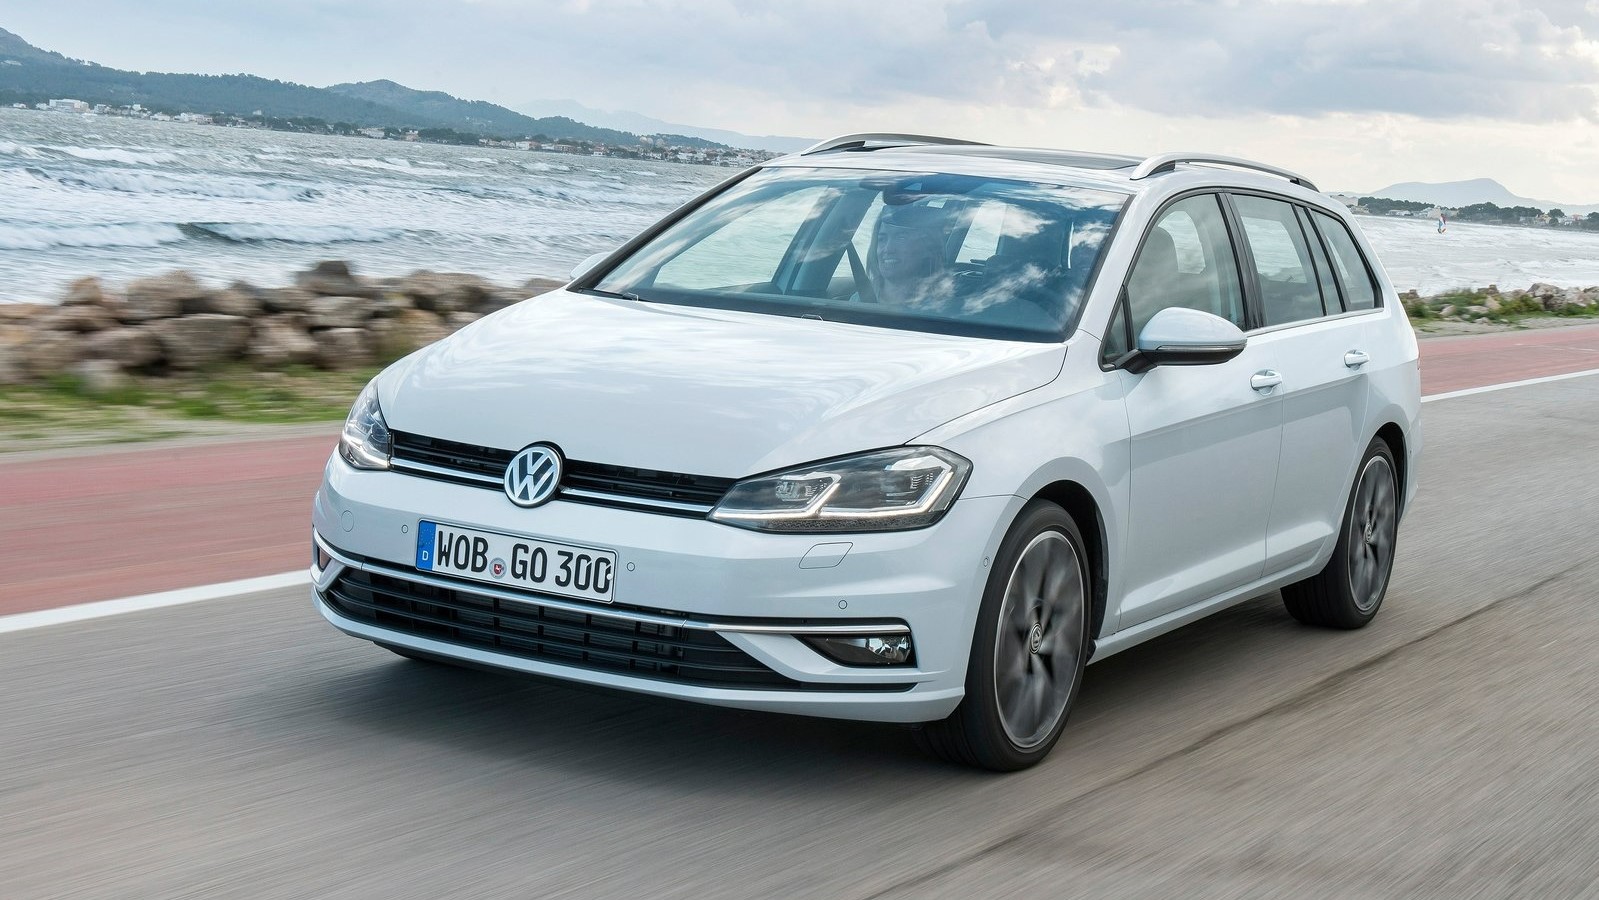 Volkswagen Golf Variant (2013-2020) Test, Konfigurator & Preise